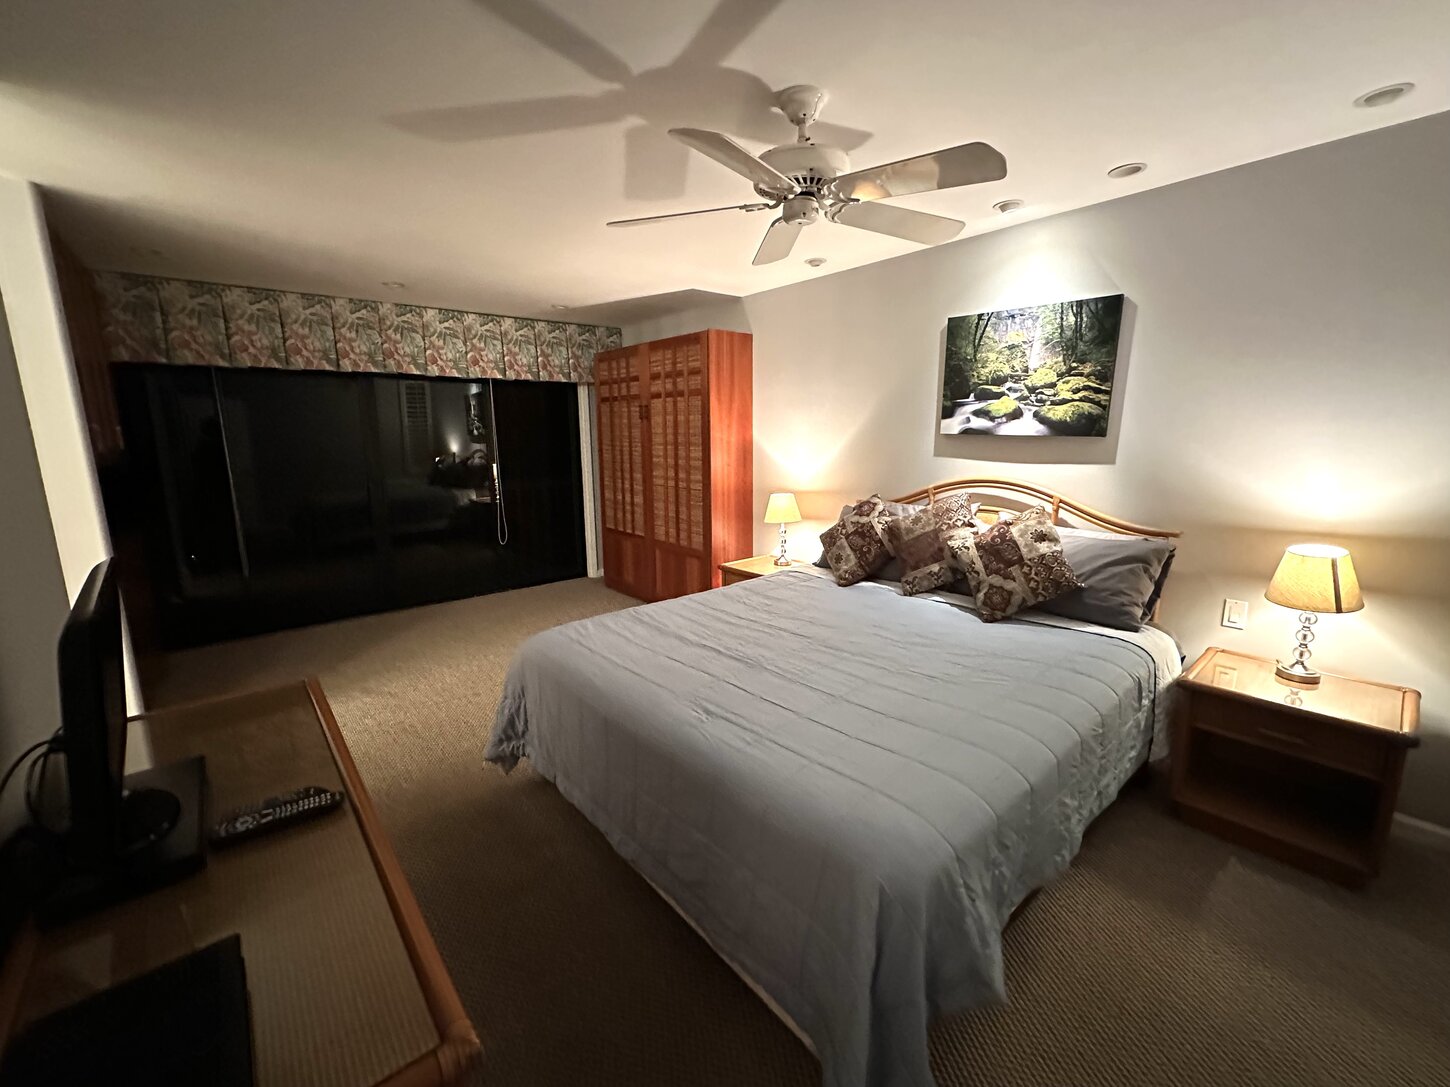 Bedroom, evening lighting, wallbed